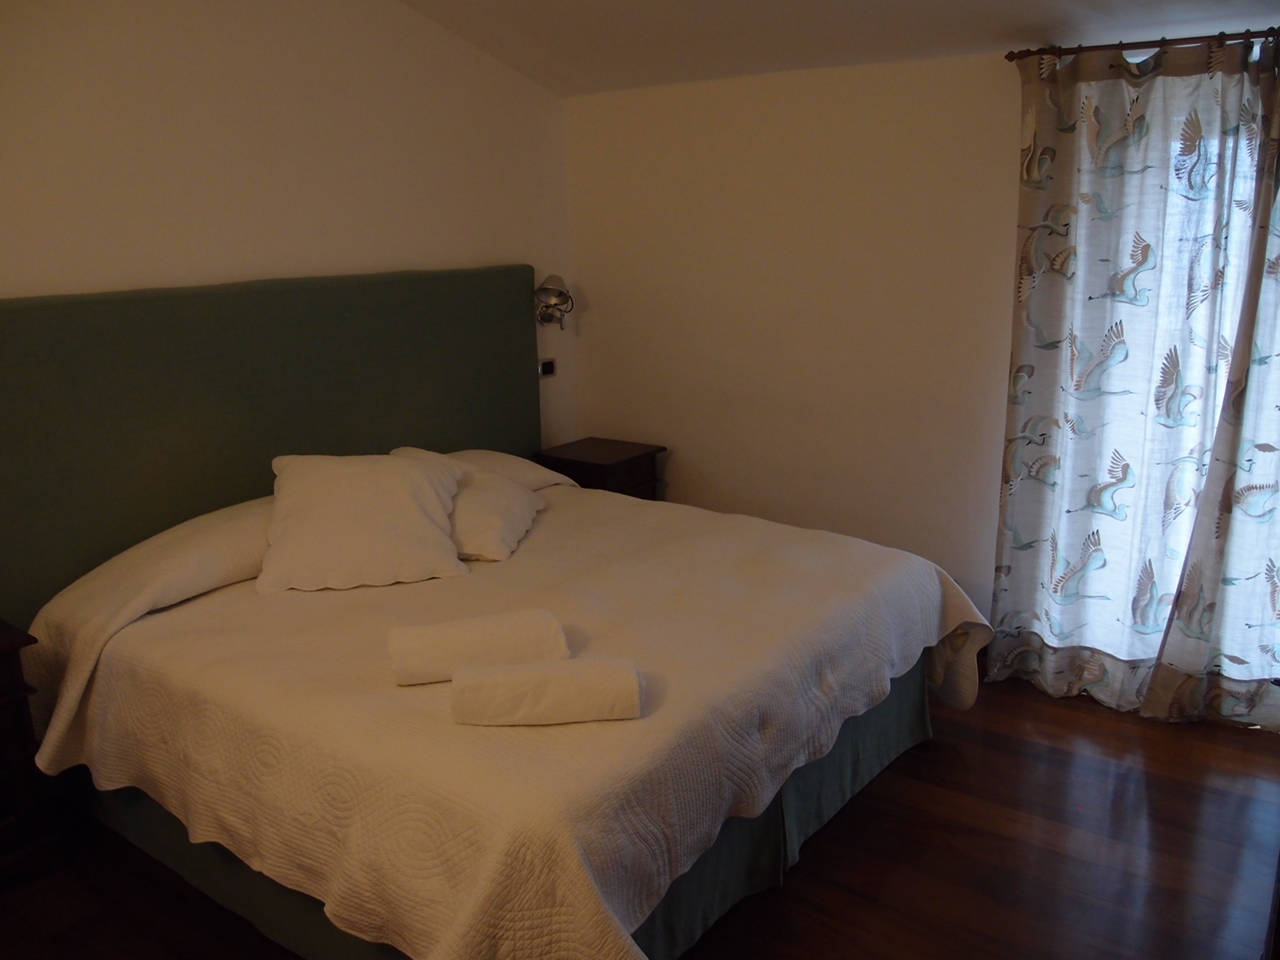 Bed & Breakfast room in Orvieto